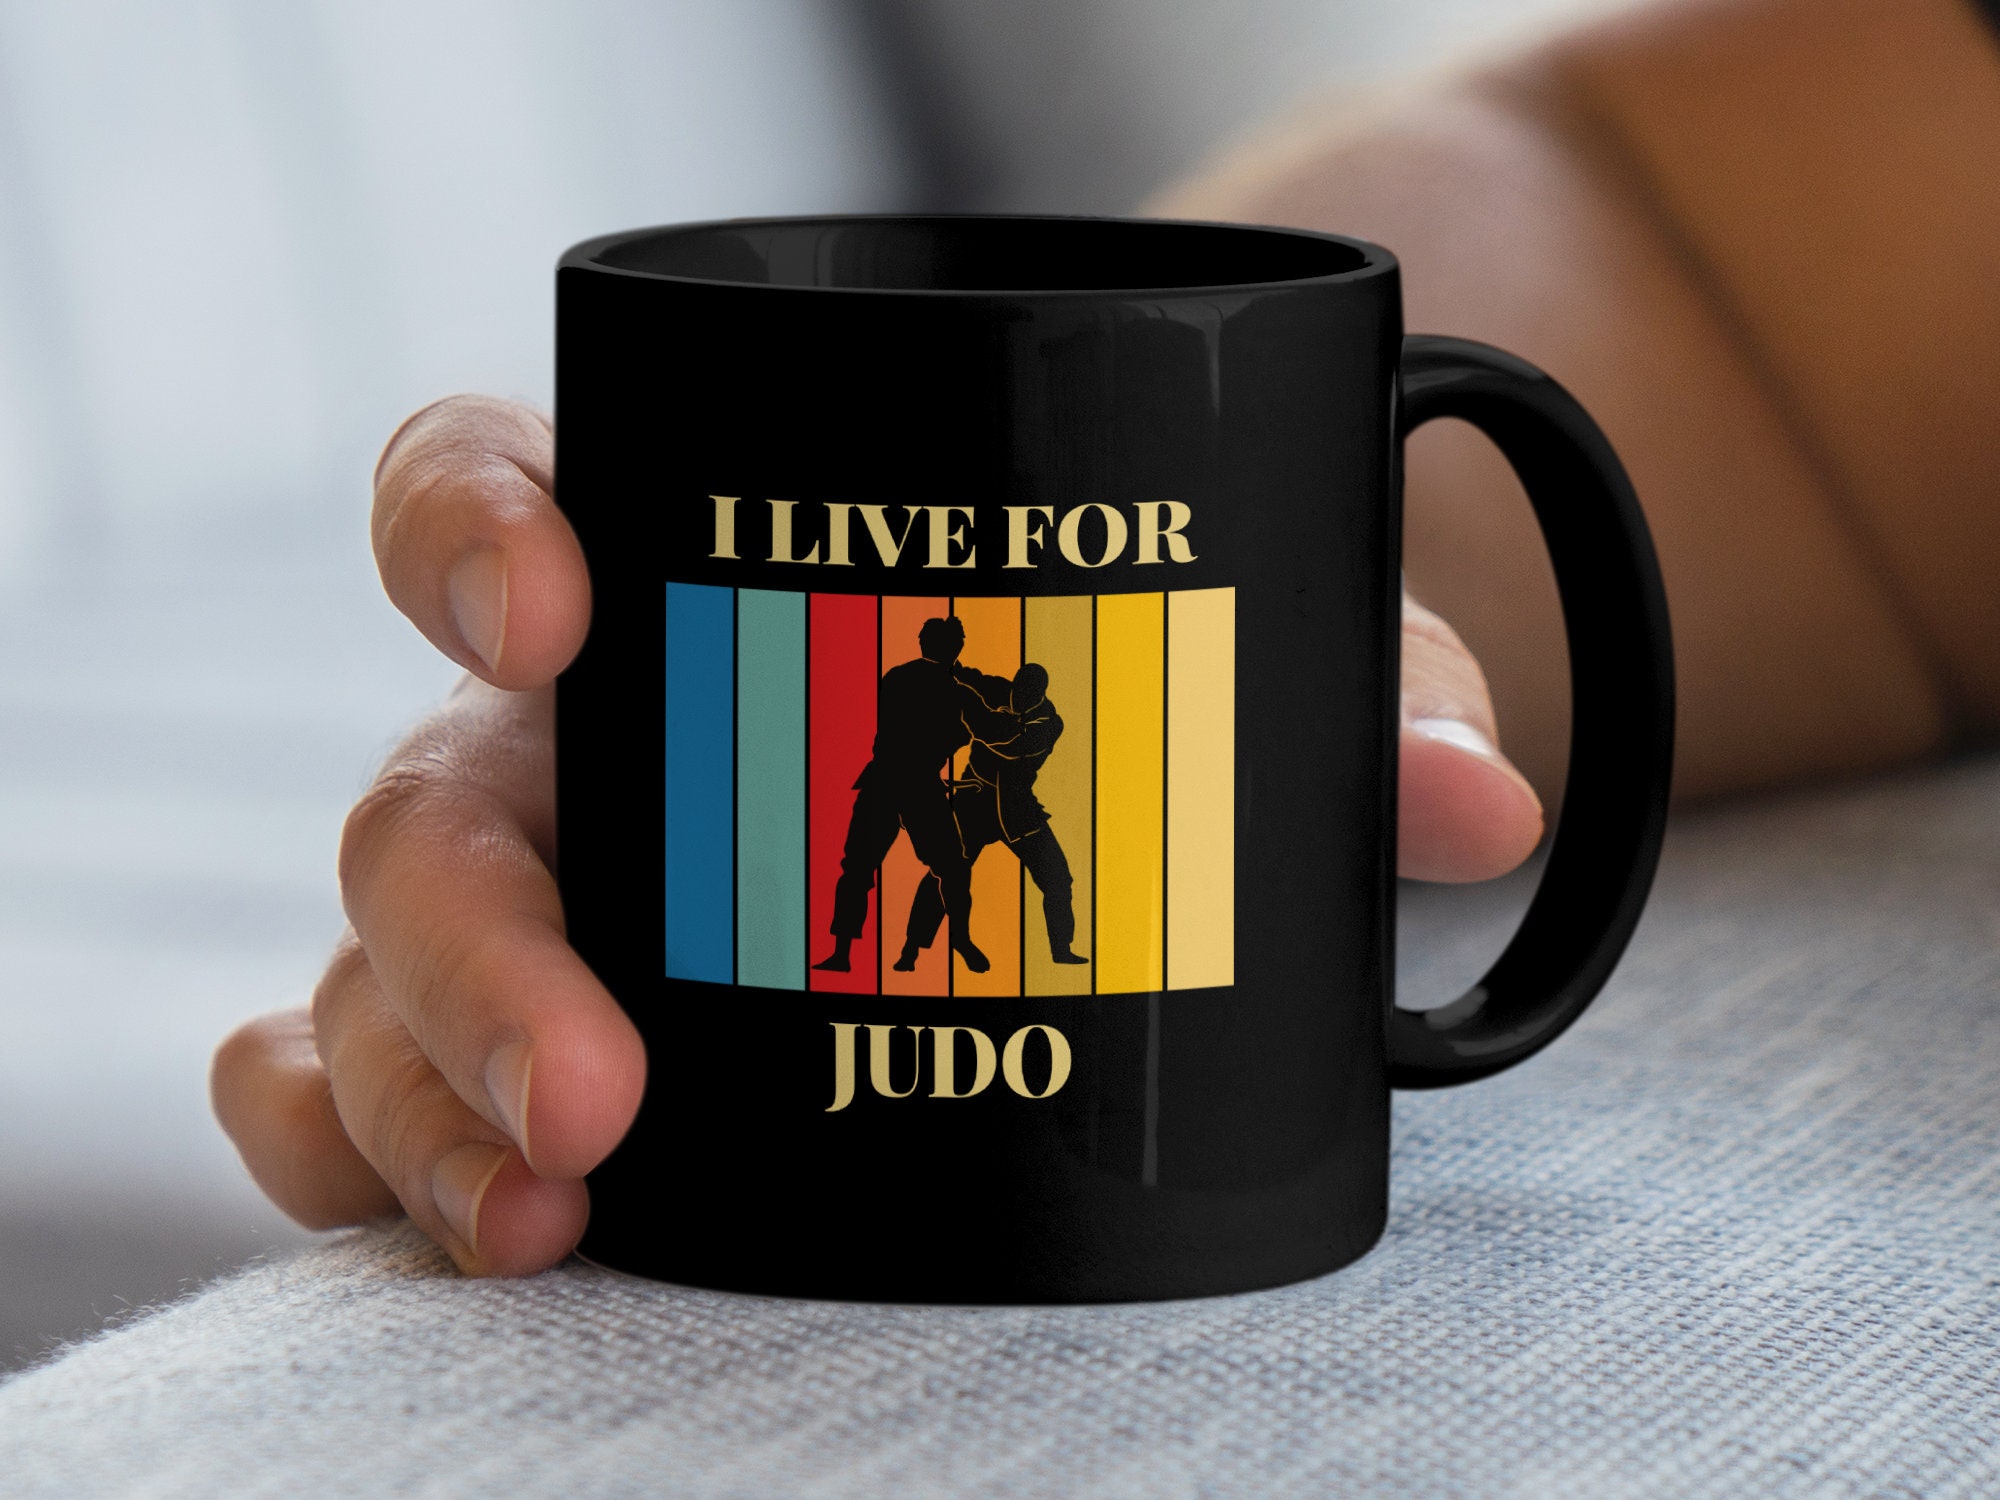 I Live for Judo Mug Cool Sports Coffee Mug Gift for Athlete